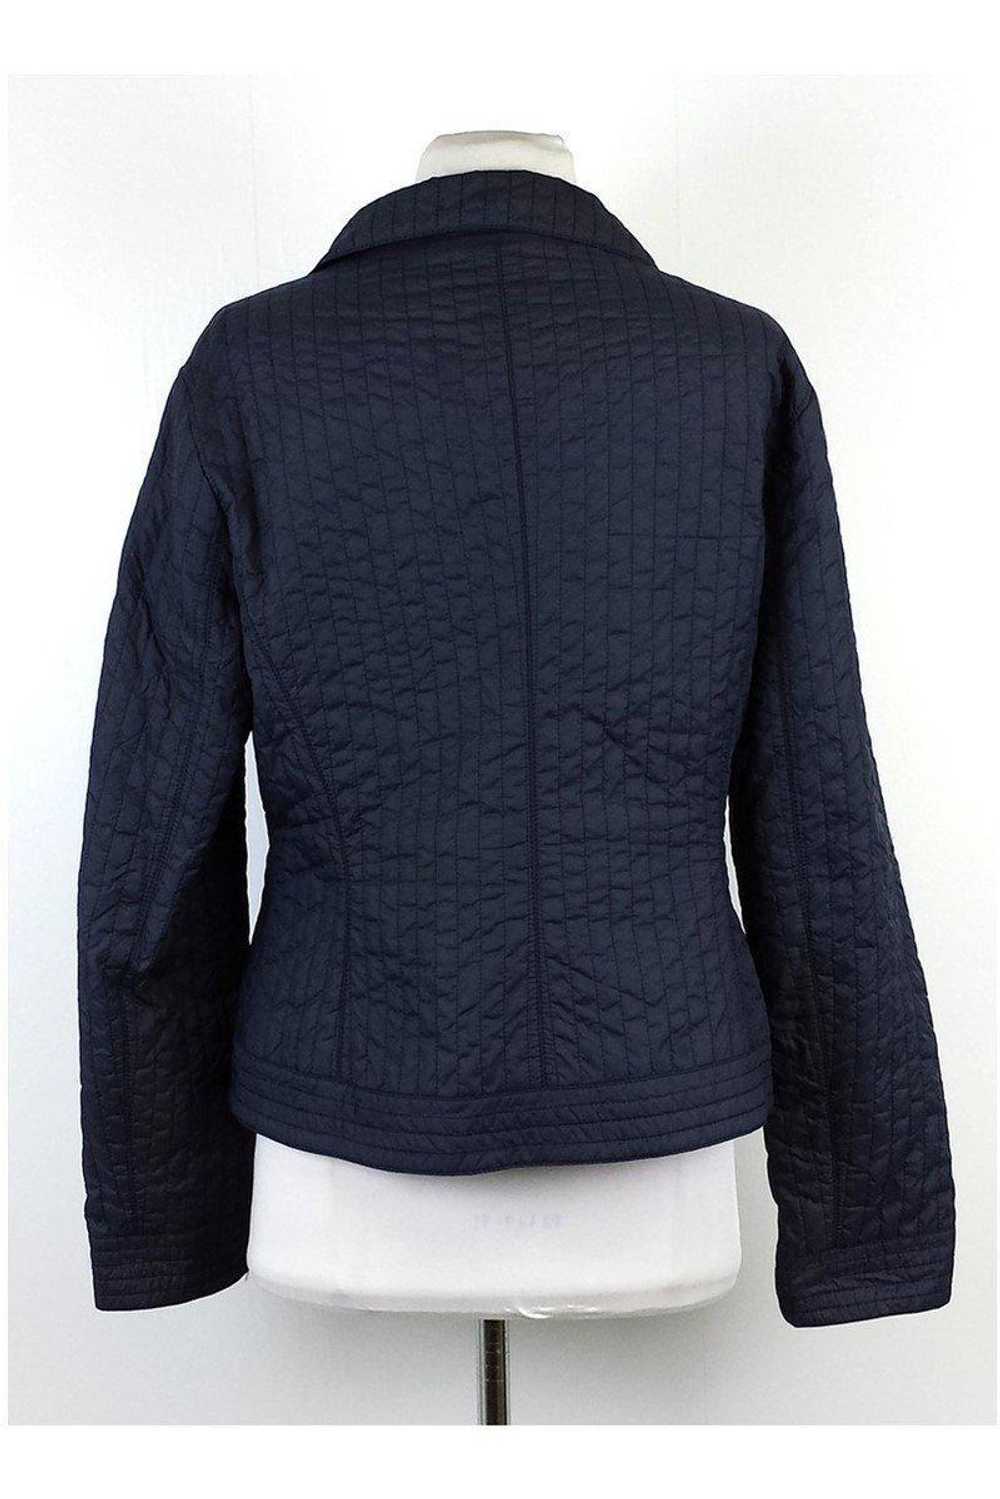 Armani Collezioni - Navy Quilted Nylon Jacket Sz 8 - image 3